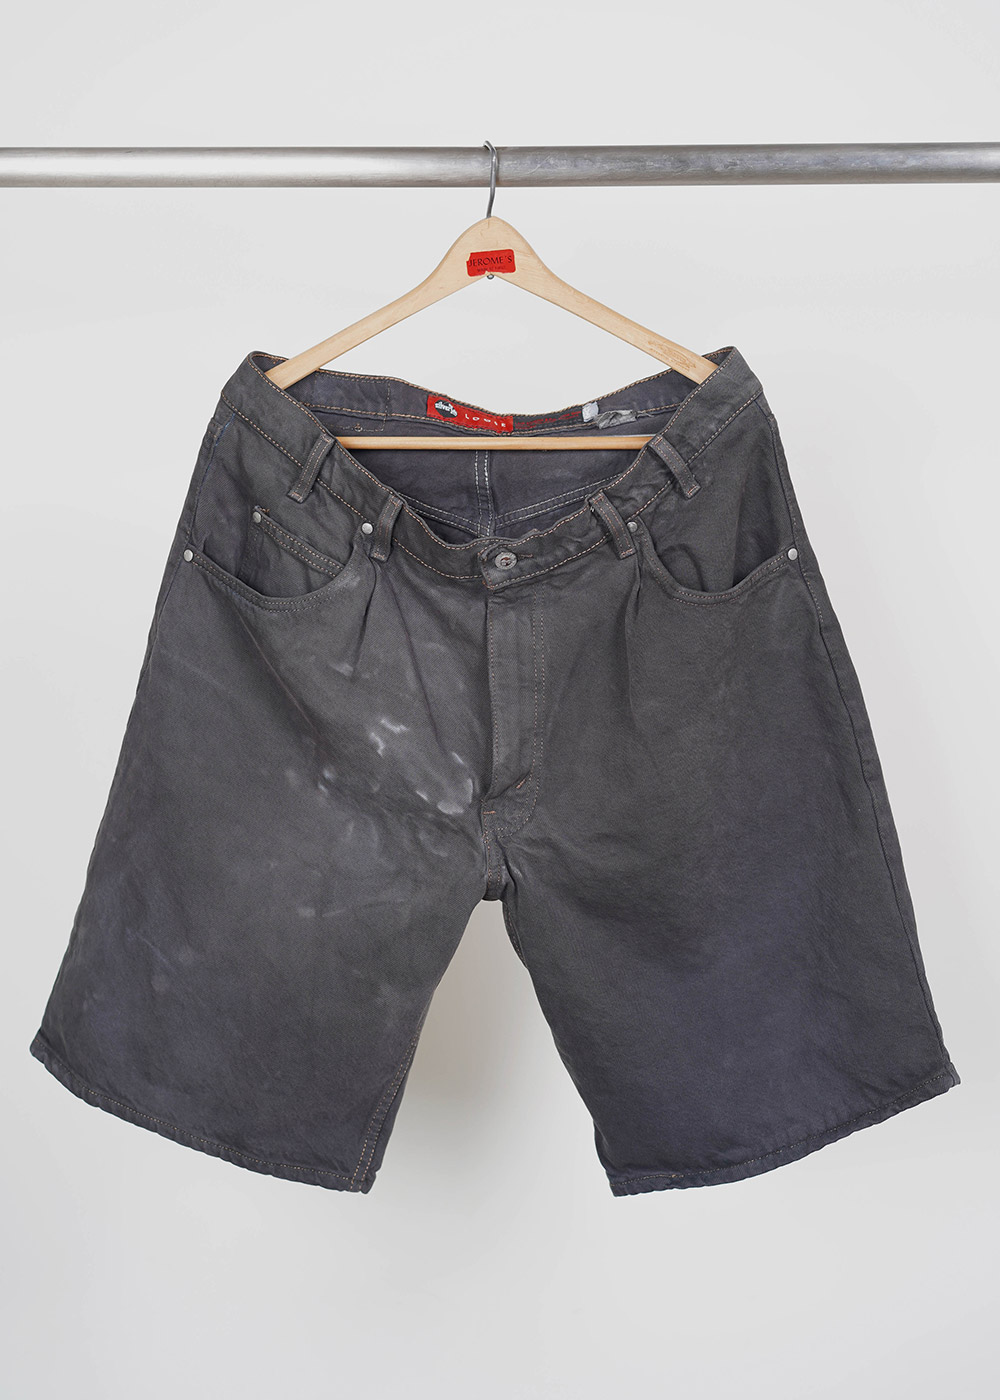 reproduction 122 / silverTab Shorts (Overdyed)